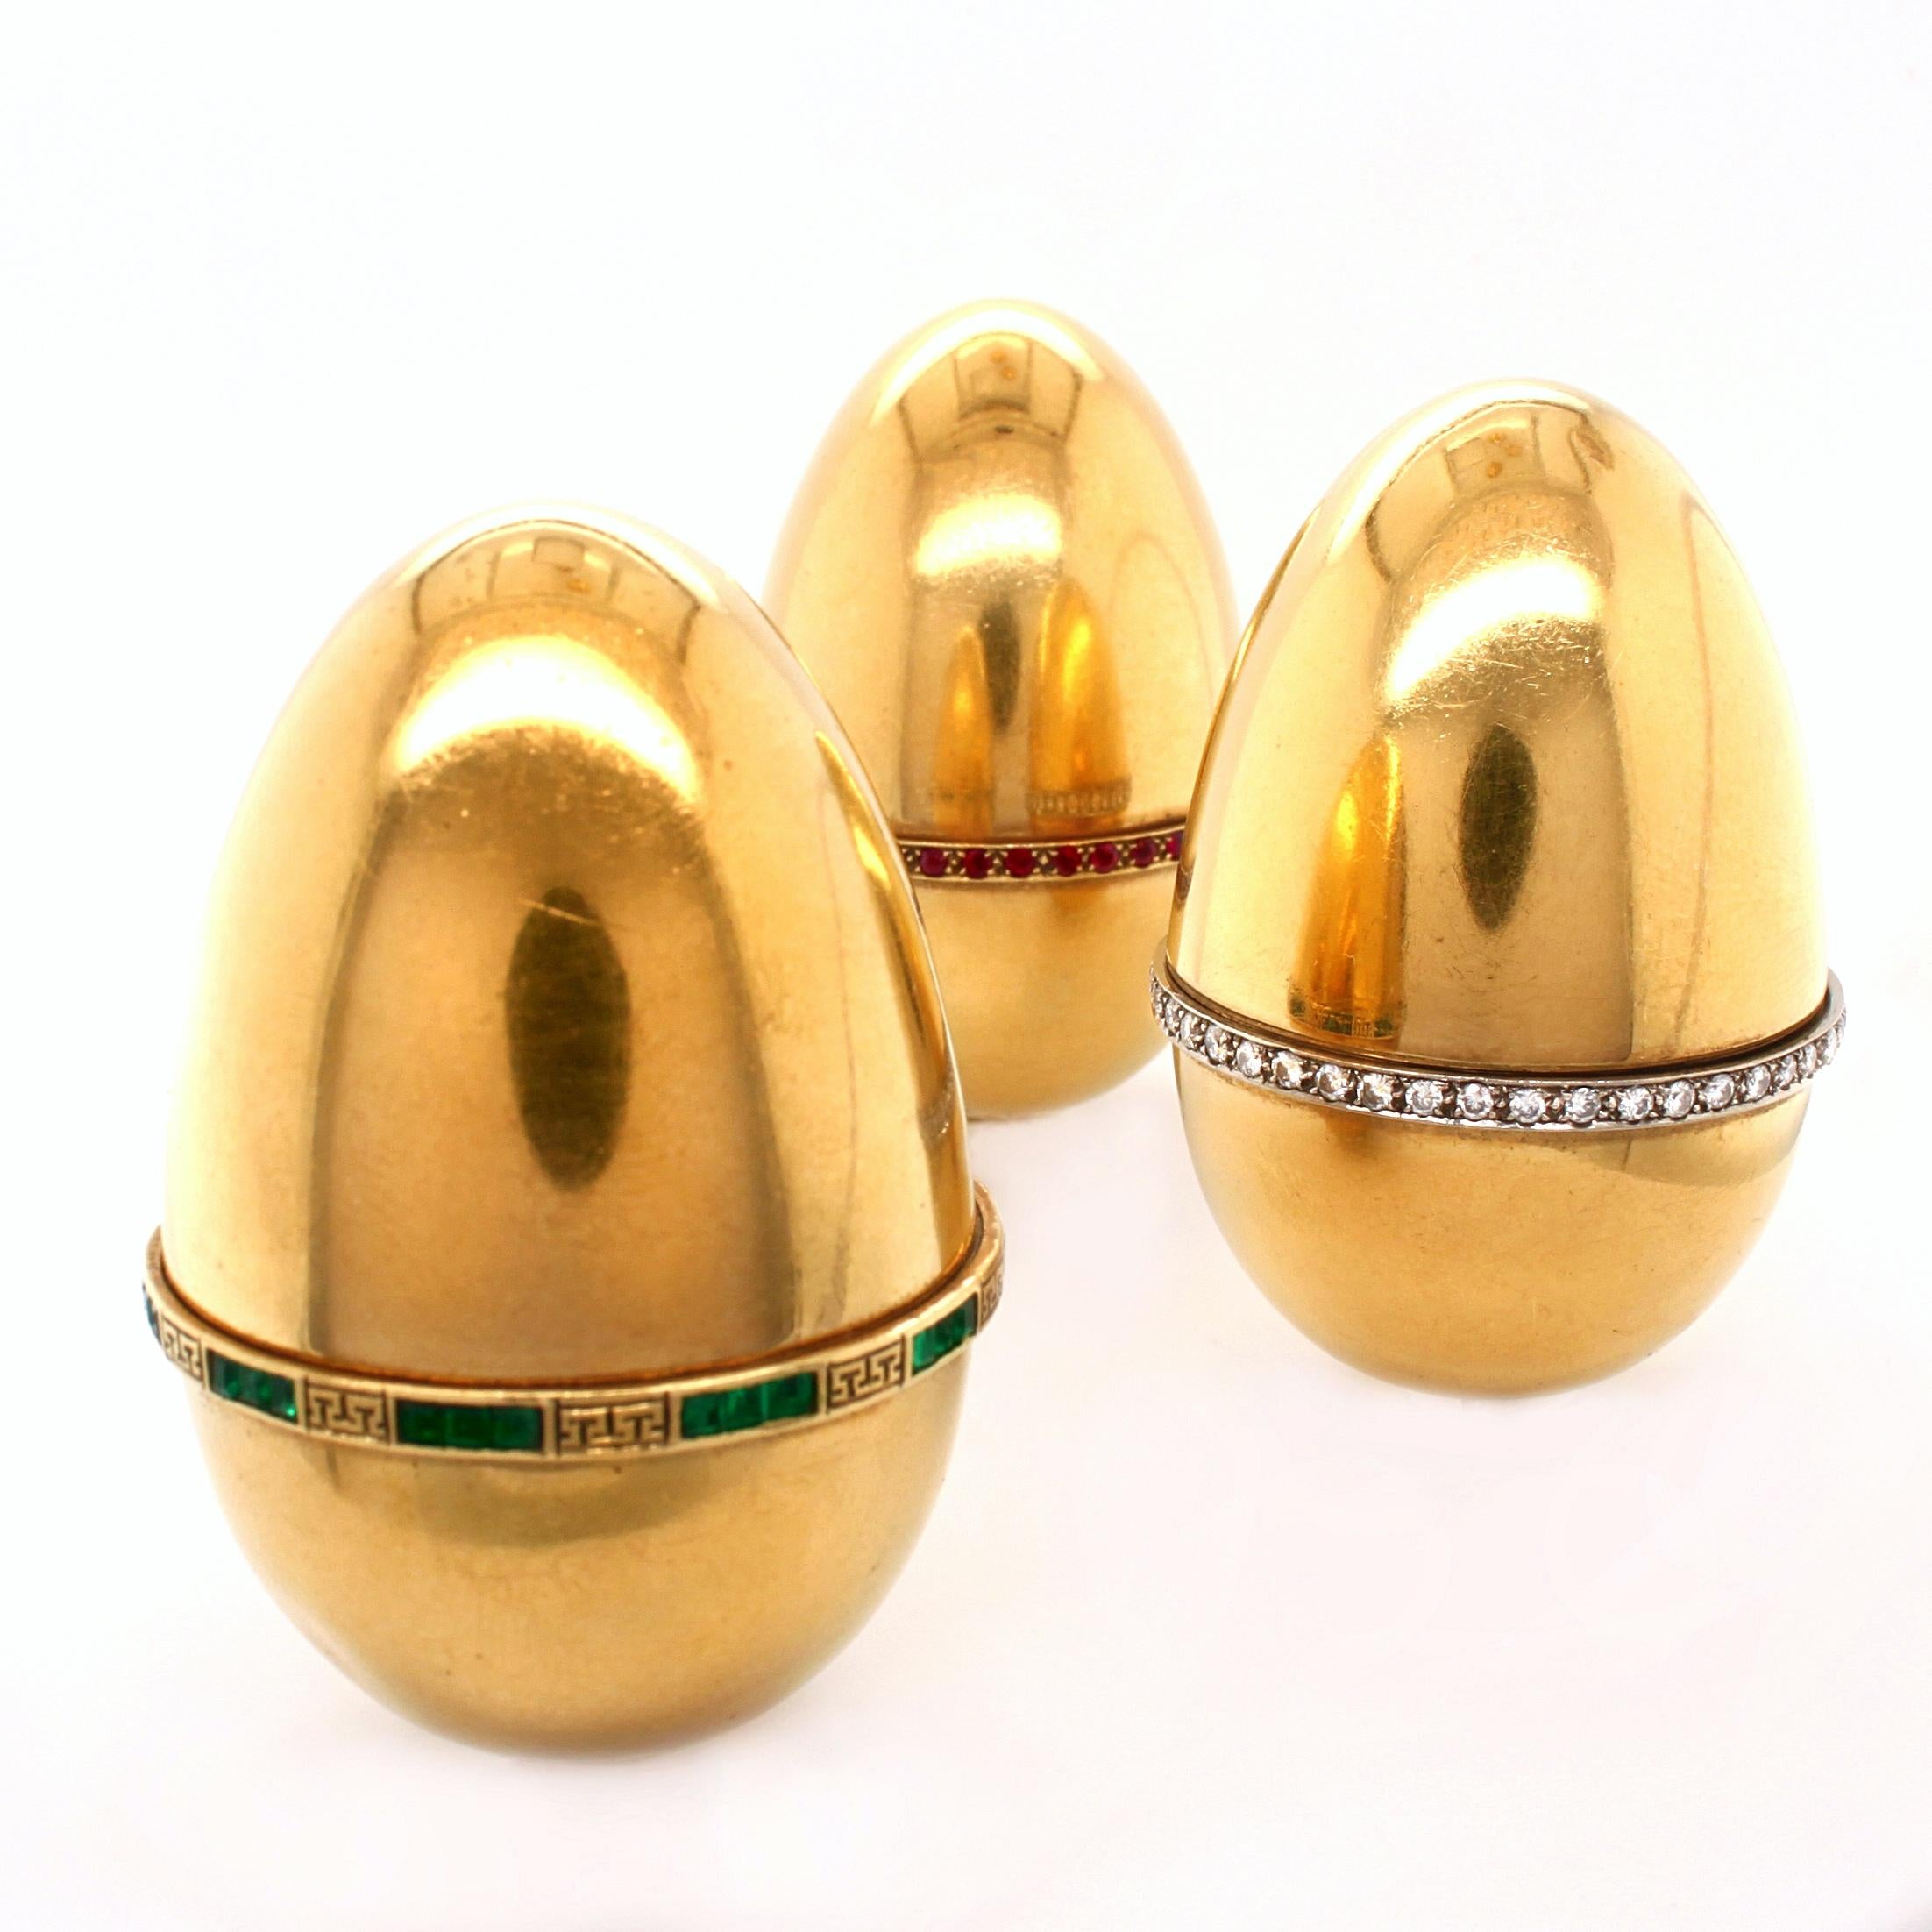 large golden eggs